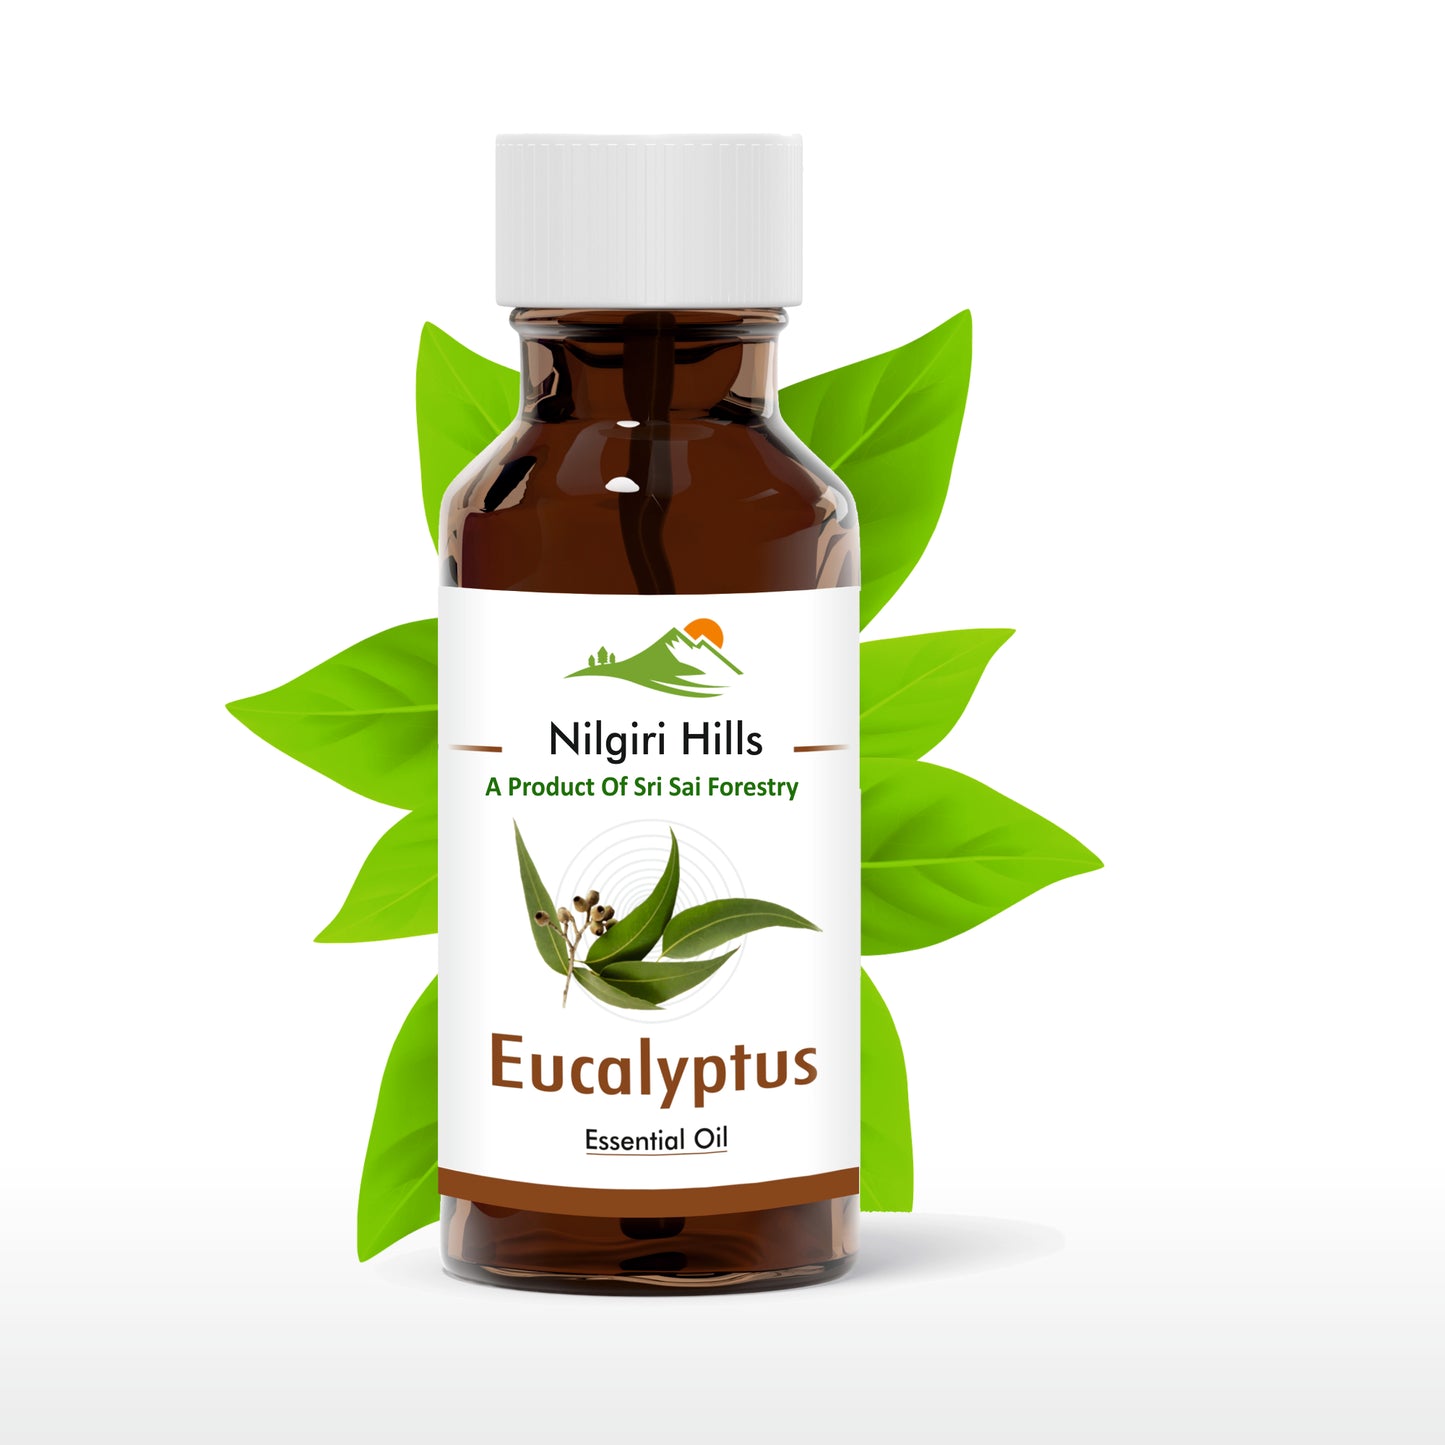 Eucalyptus (Nilgiri) Essential Oil - Therapeutic Grade